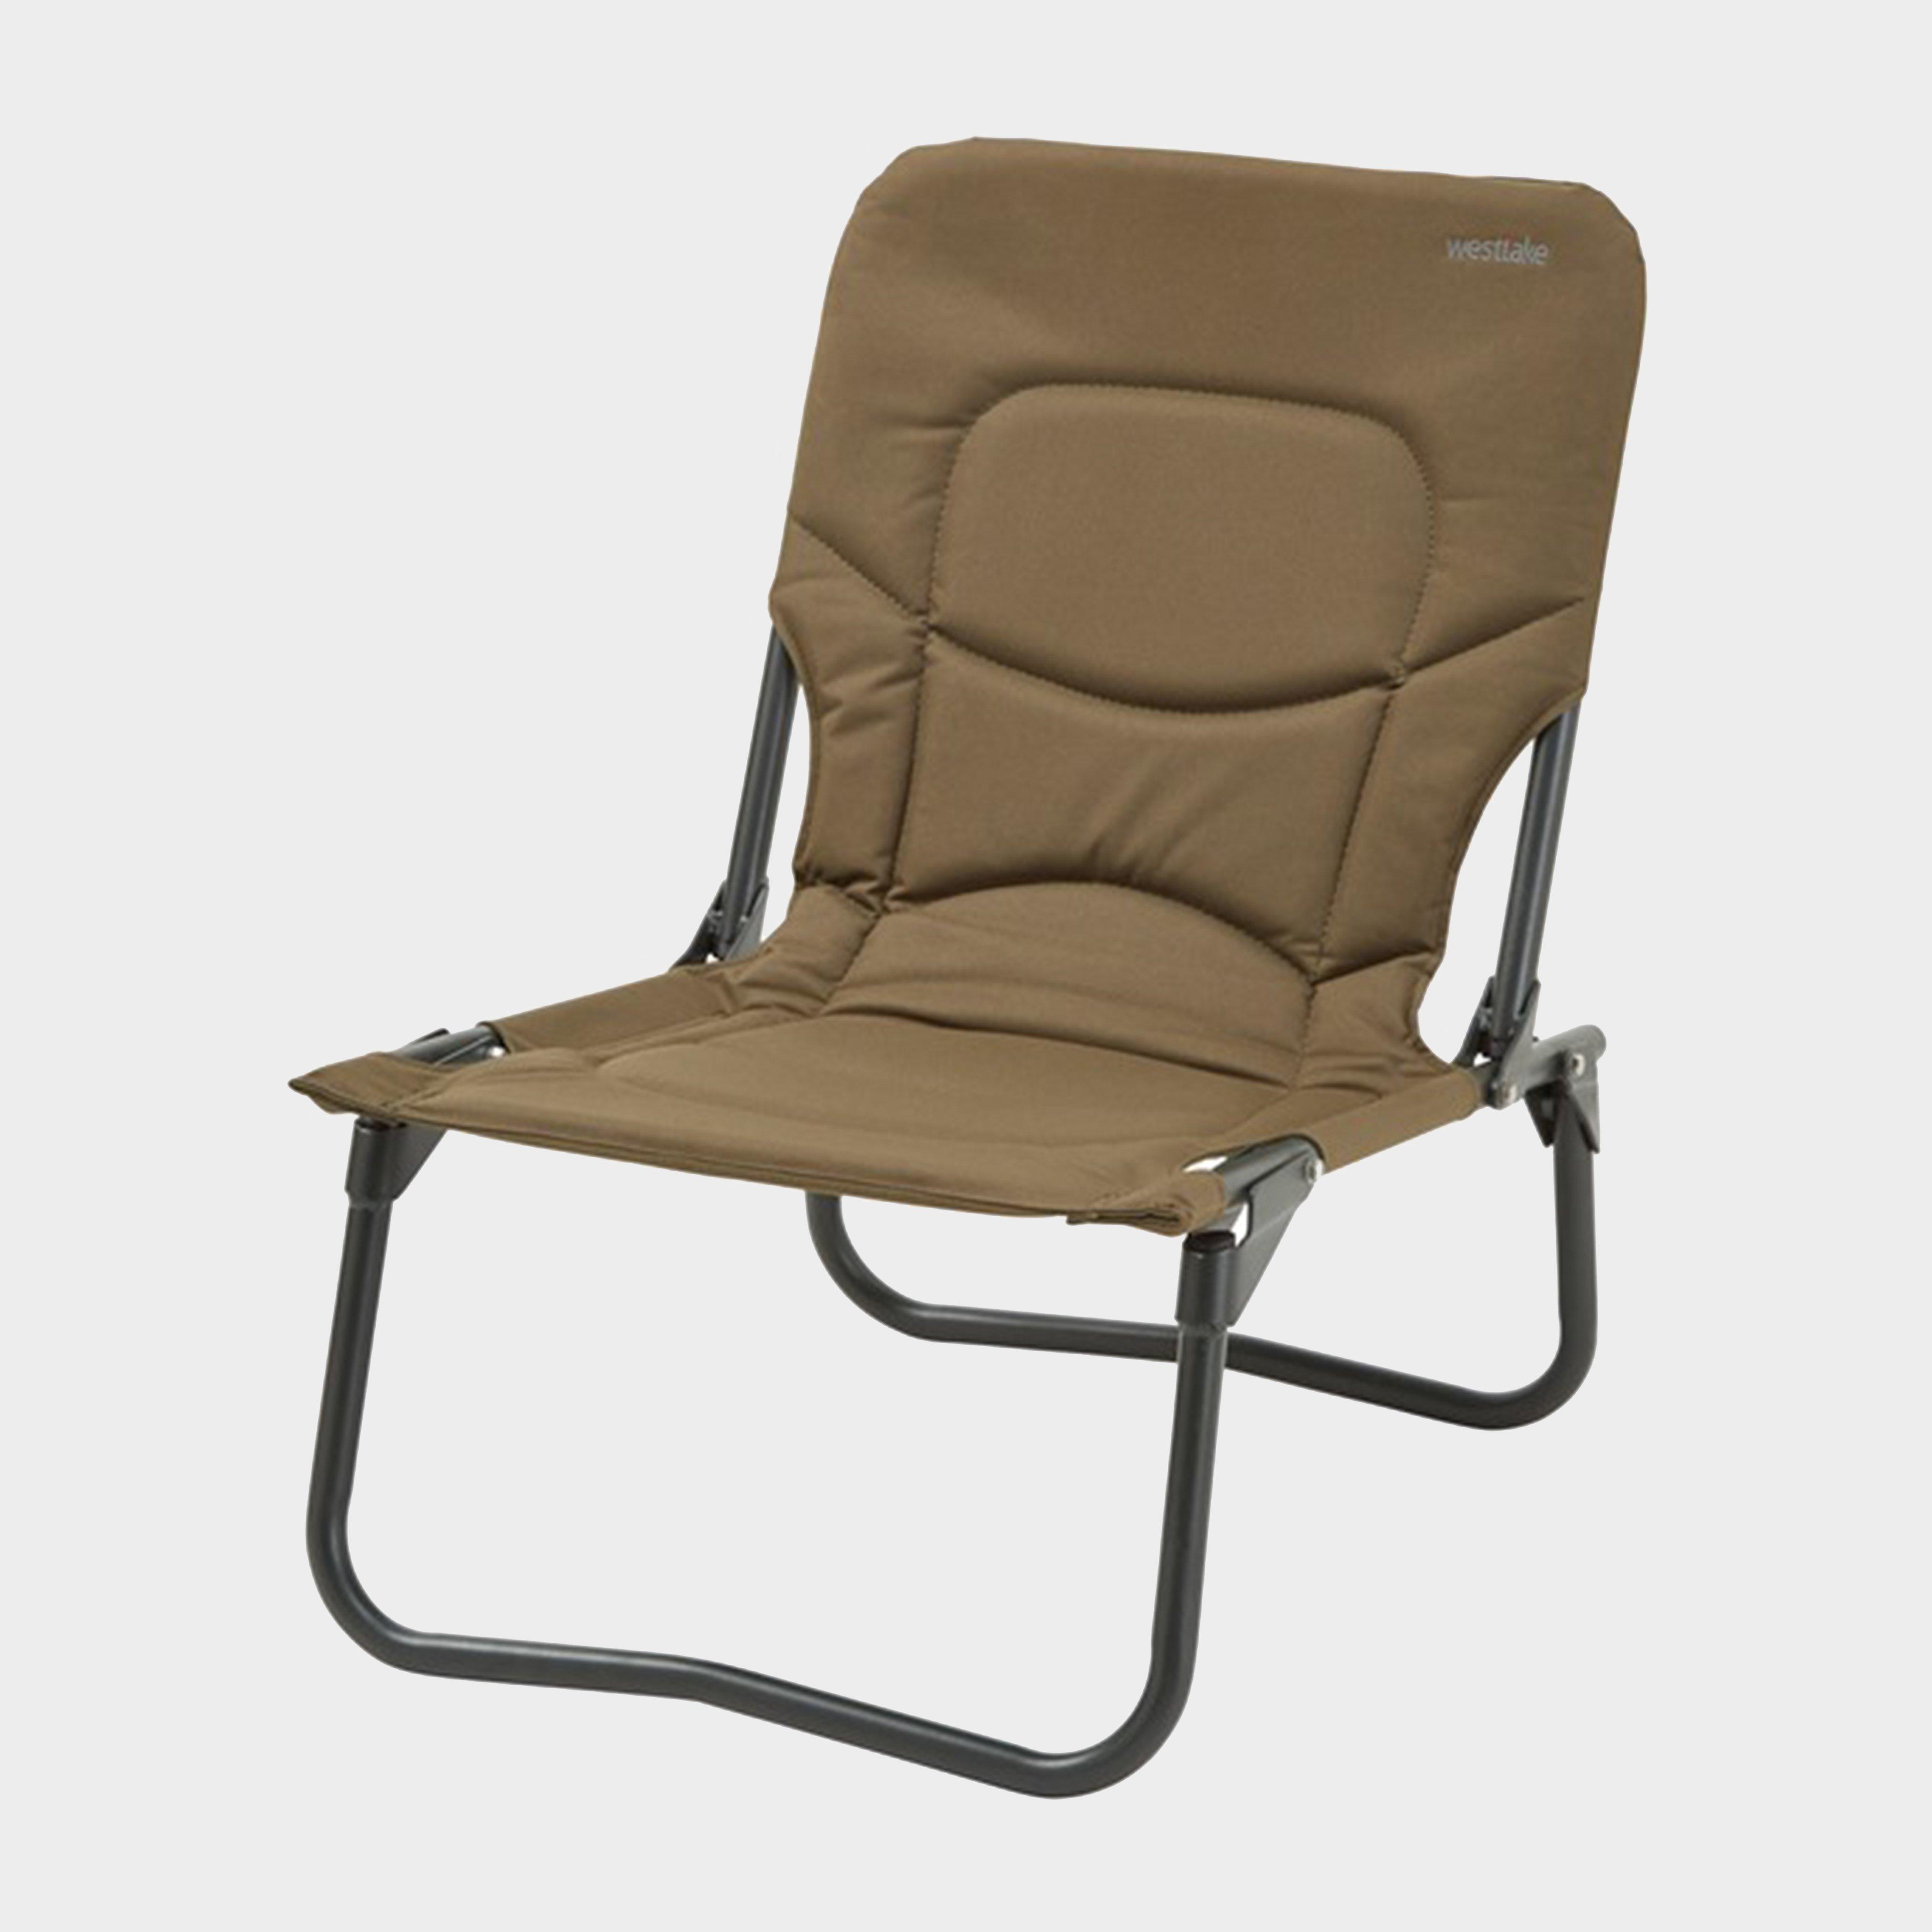 Westlake Westlake Ultra-Lite Chair, CHAIR